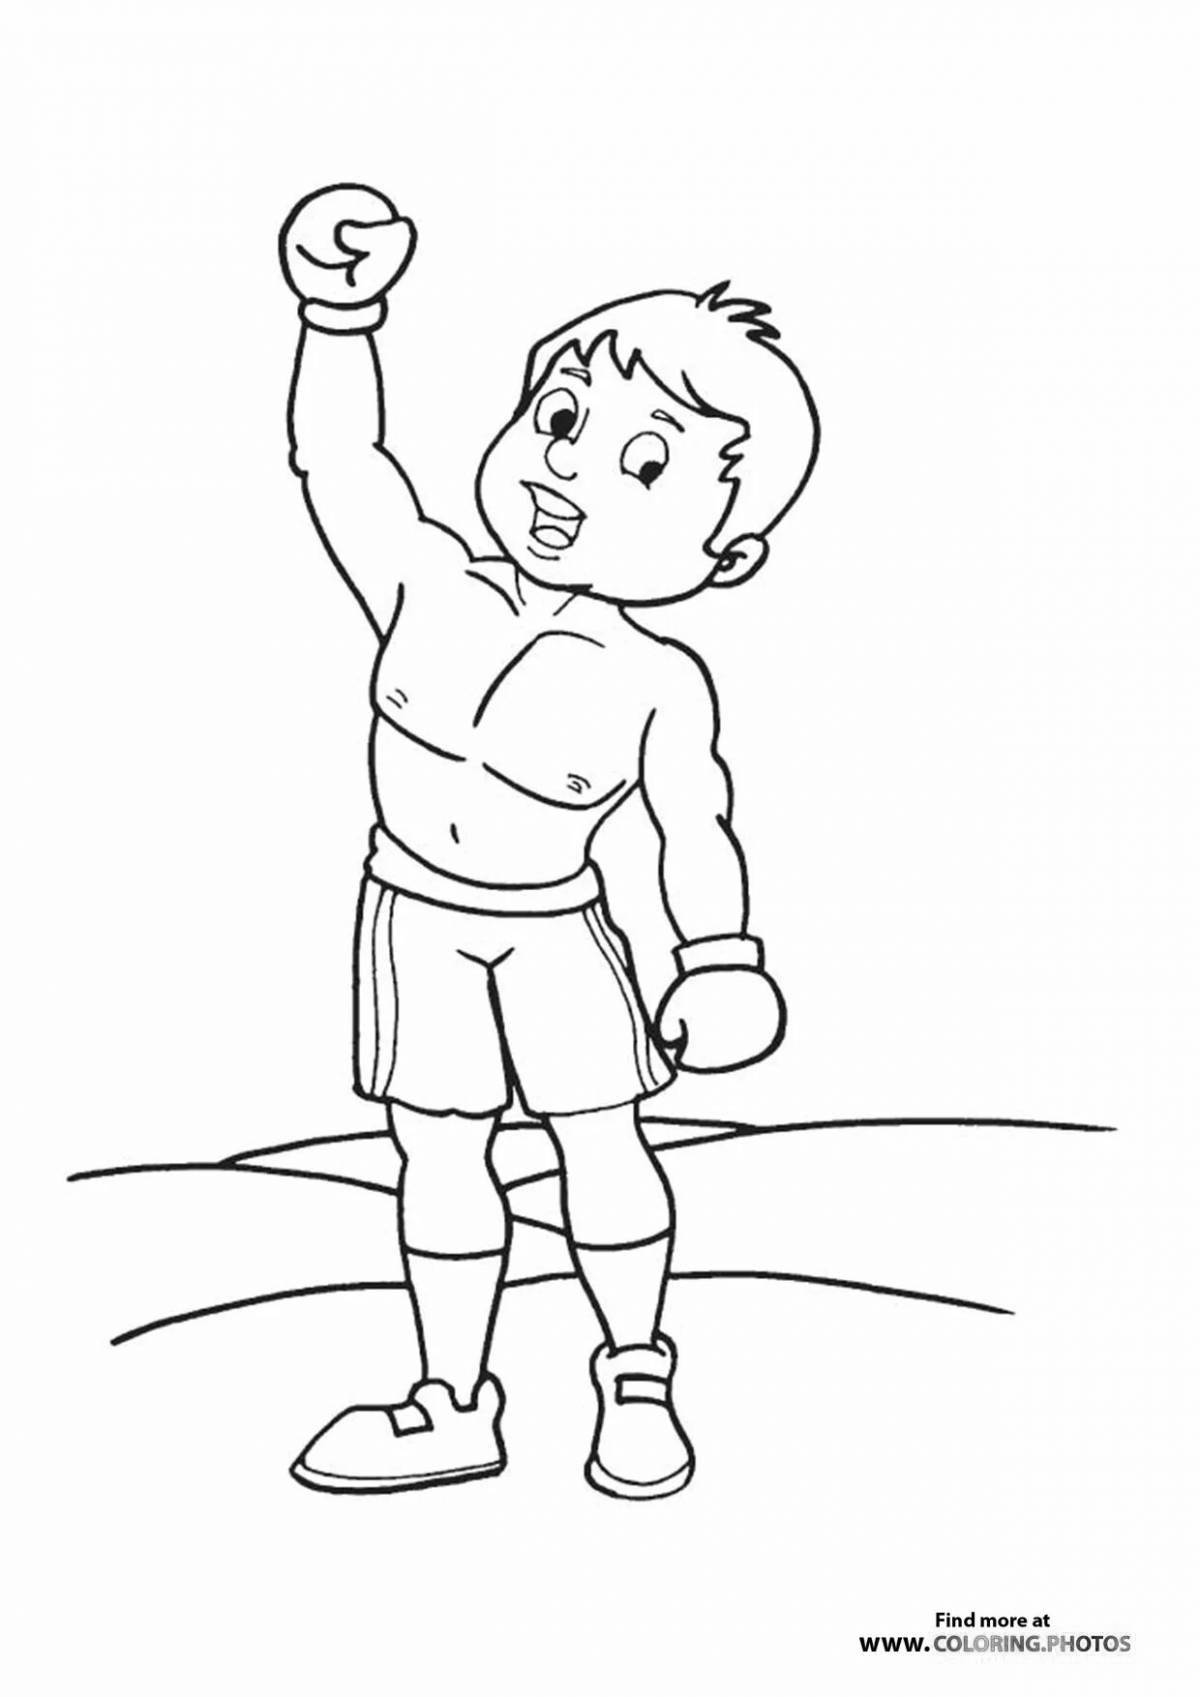 Раскраска sweet boxing для детей